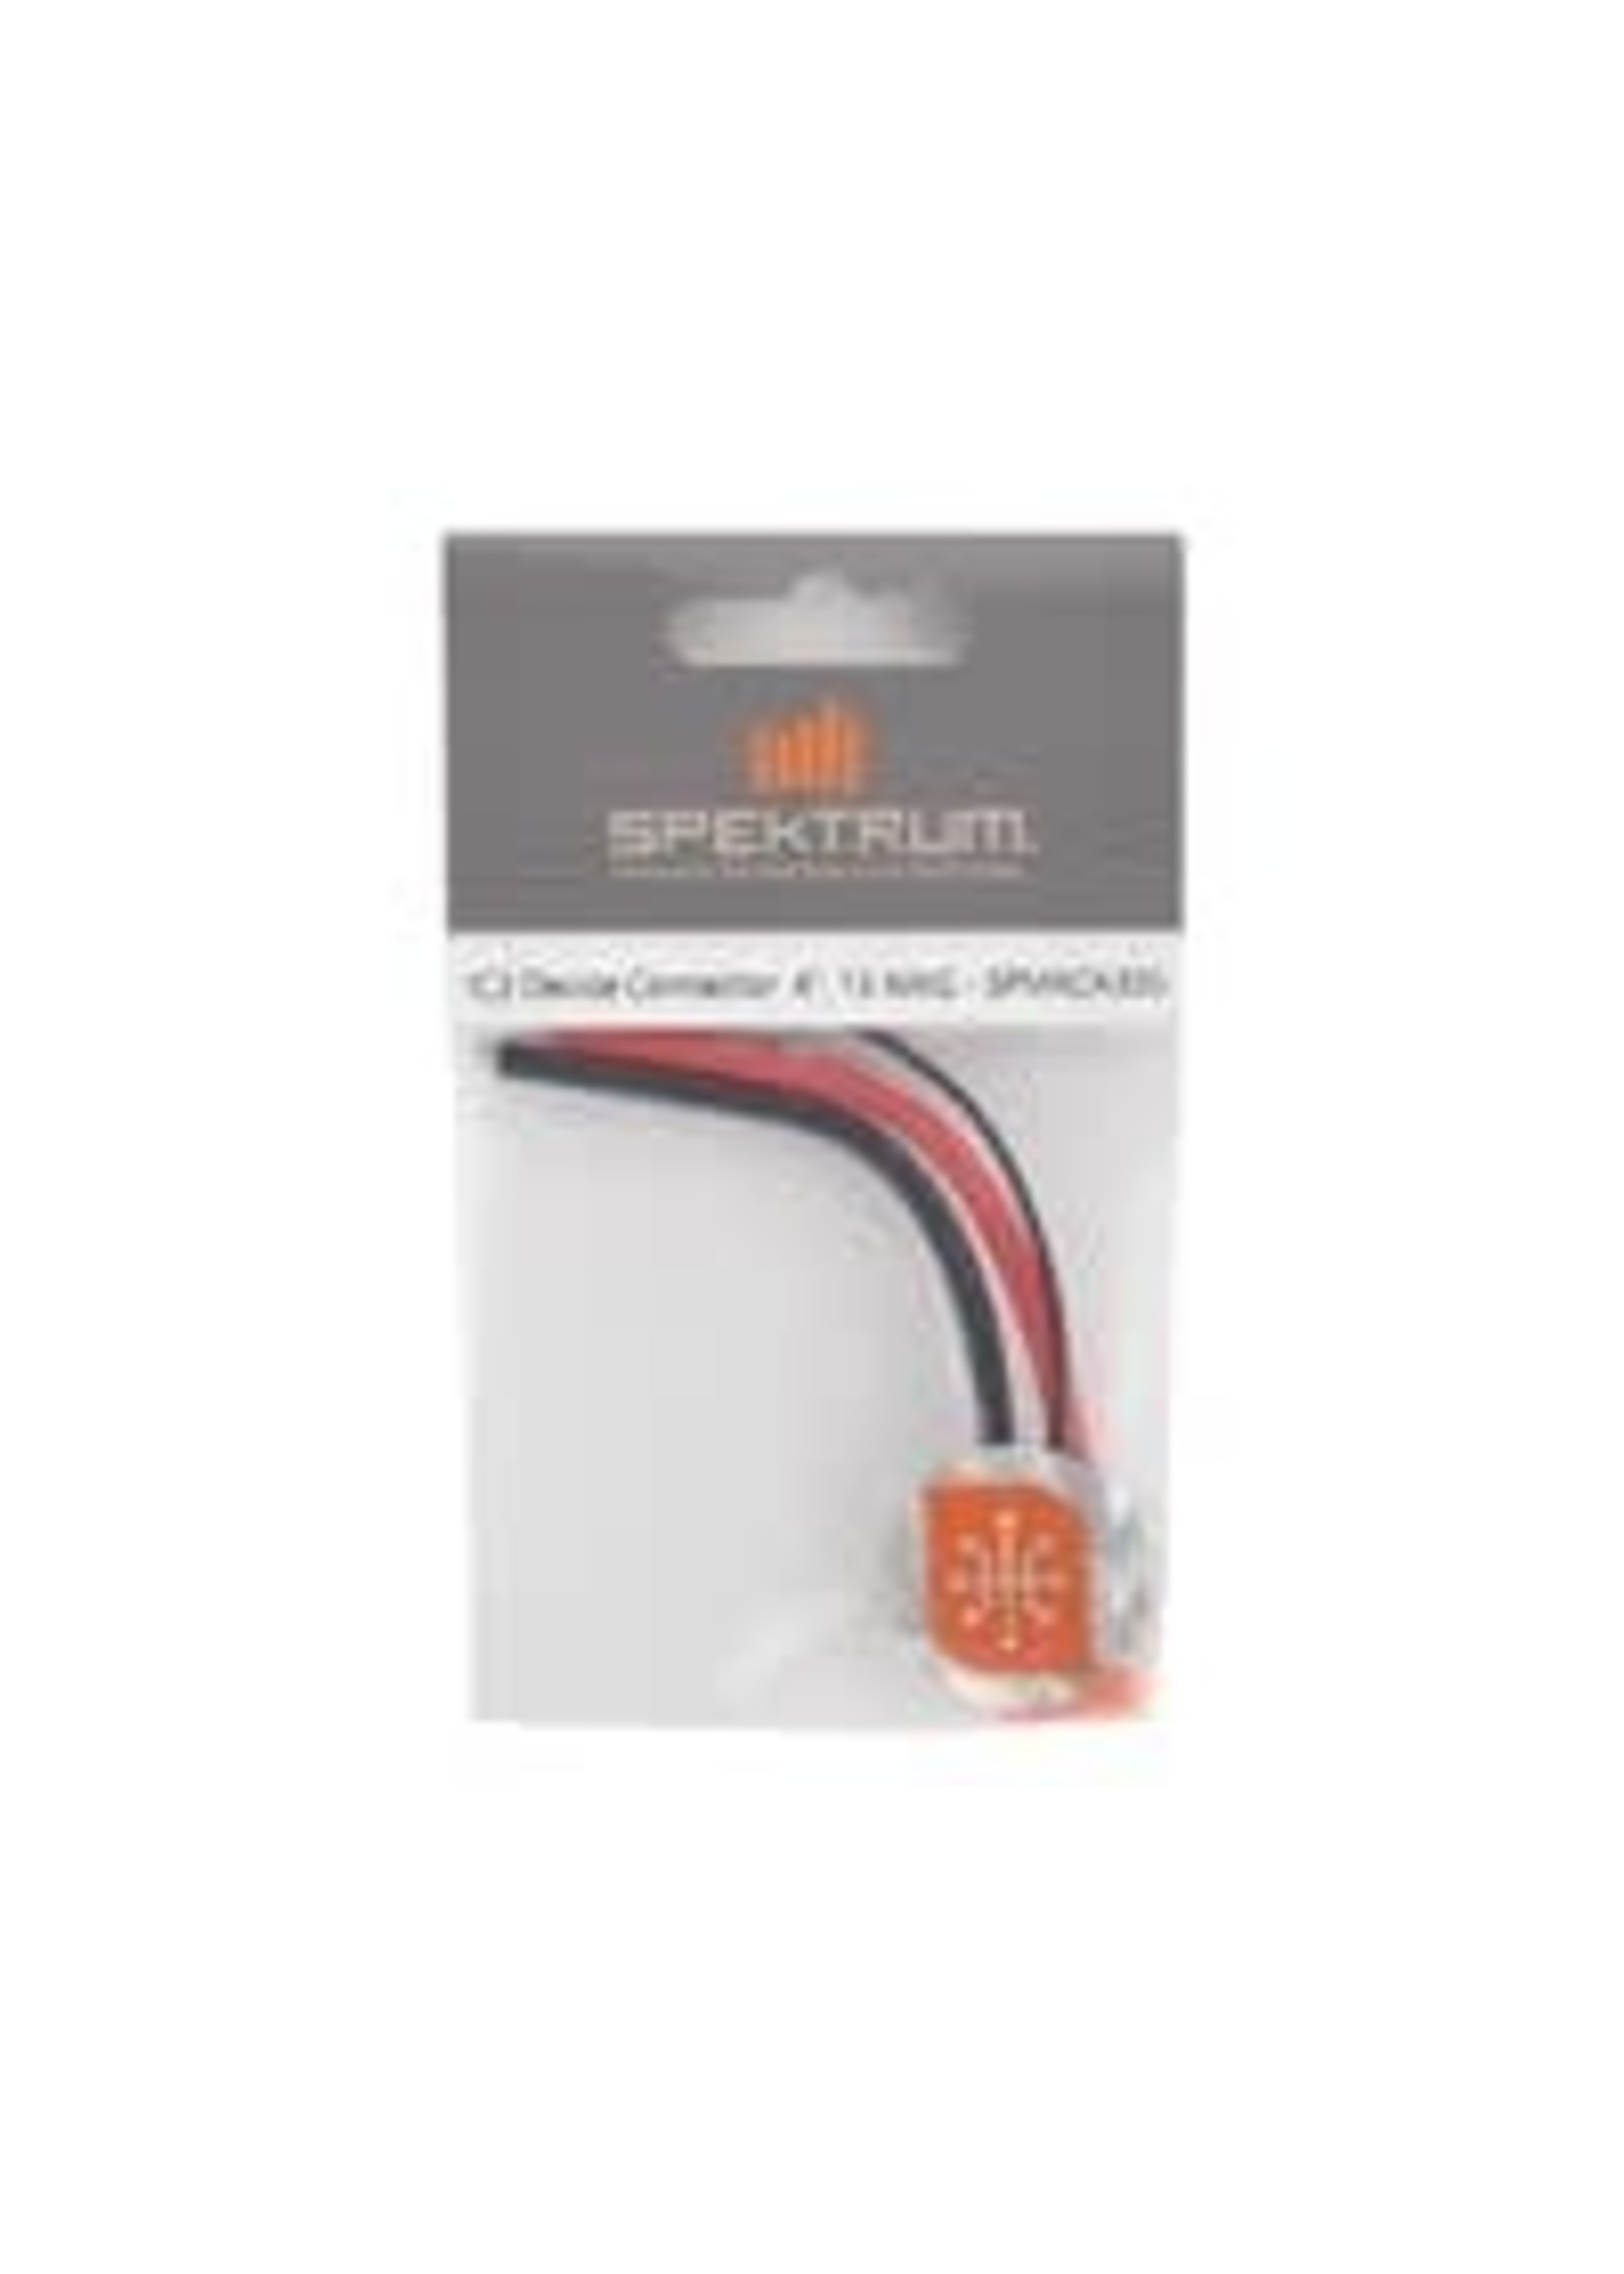 Spektrum SPMXCA305 Connector: IC3 Device w/ 4" 13AWG Wires